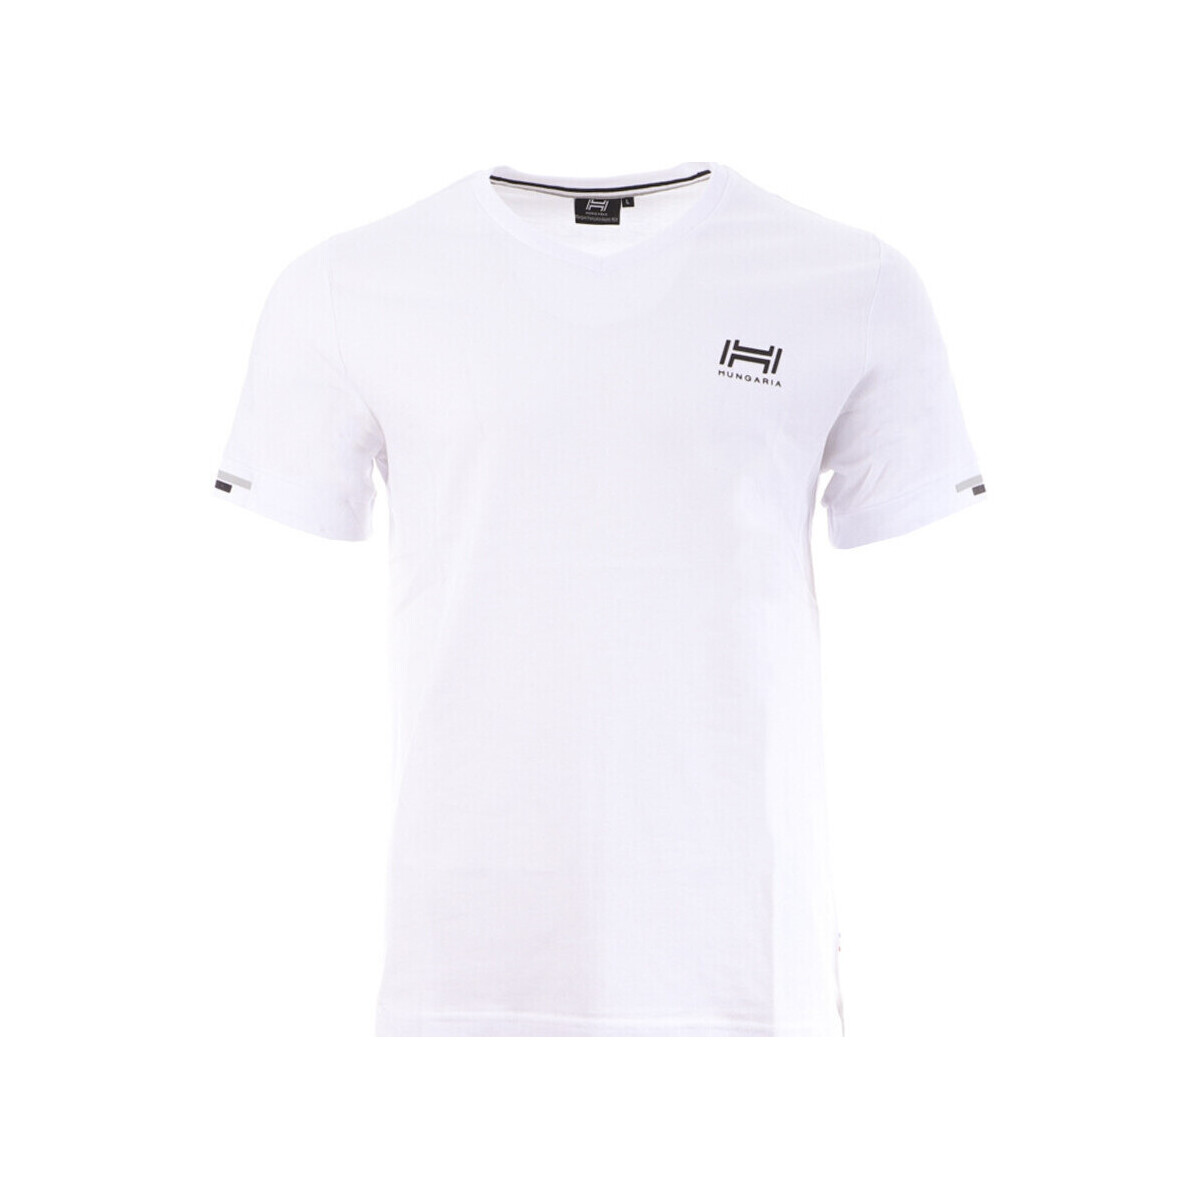 Vêtements Homme SUPREME logo zipped jacket 718630-60 Blanc